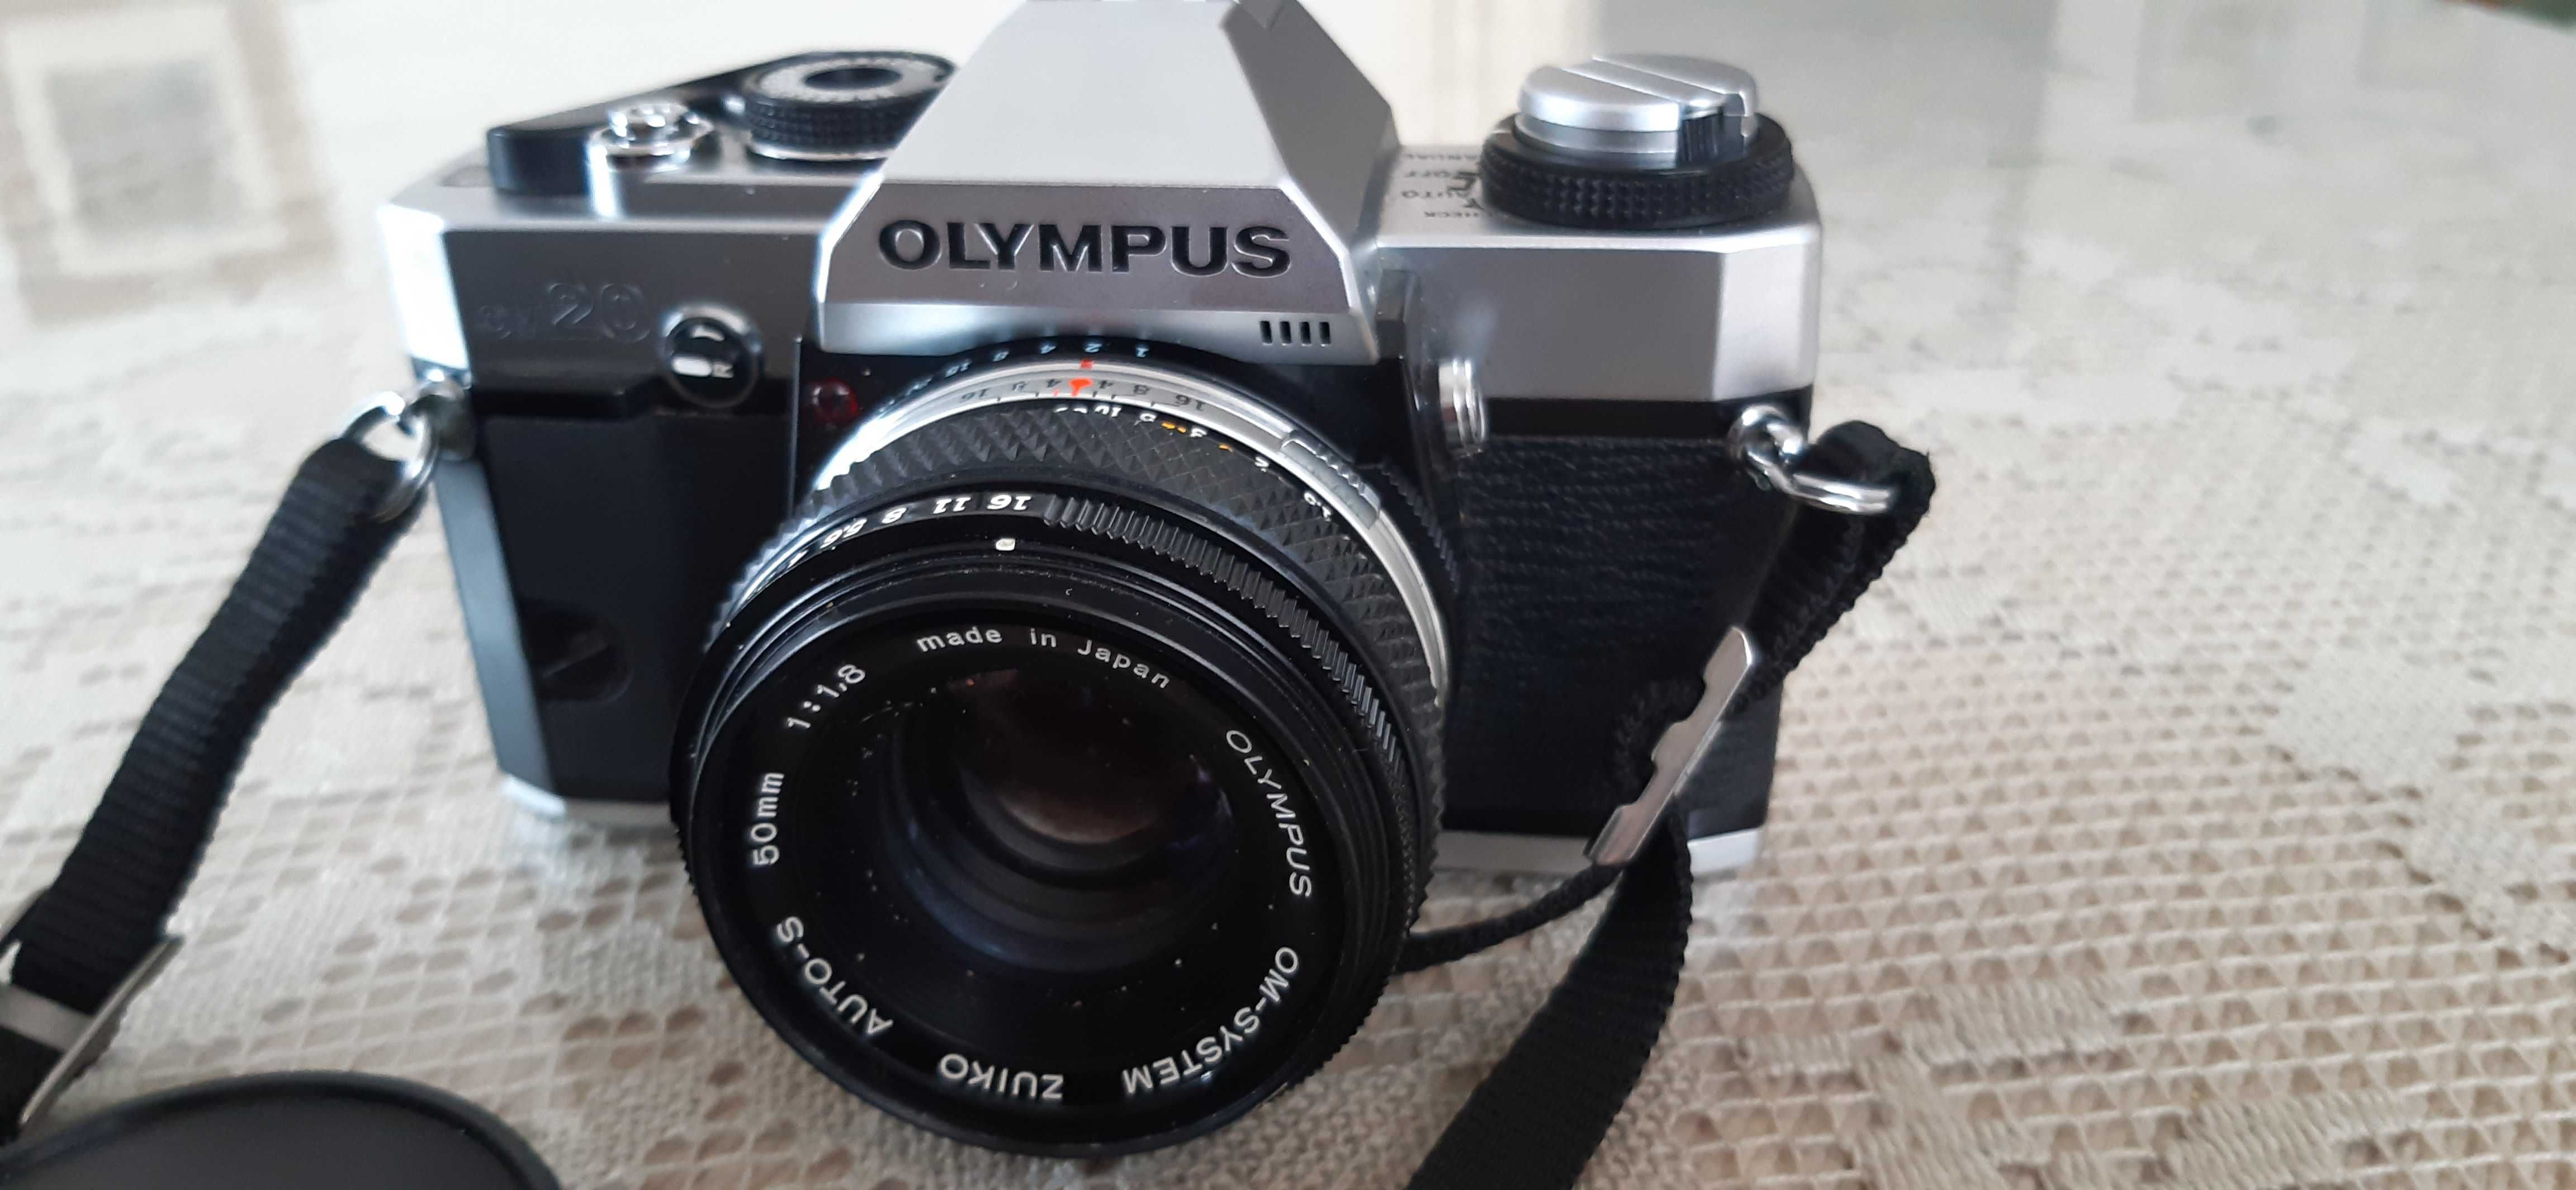 Maquinas fotográficas Olympus e Yashica vintage